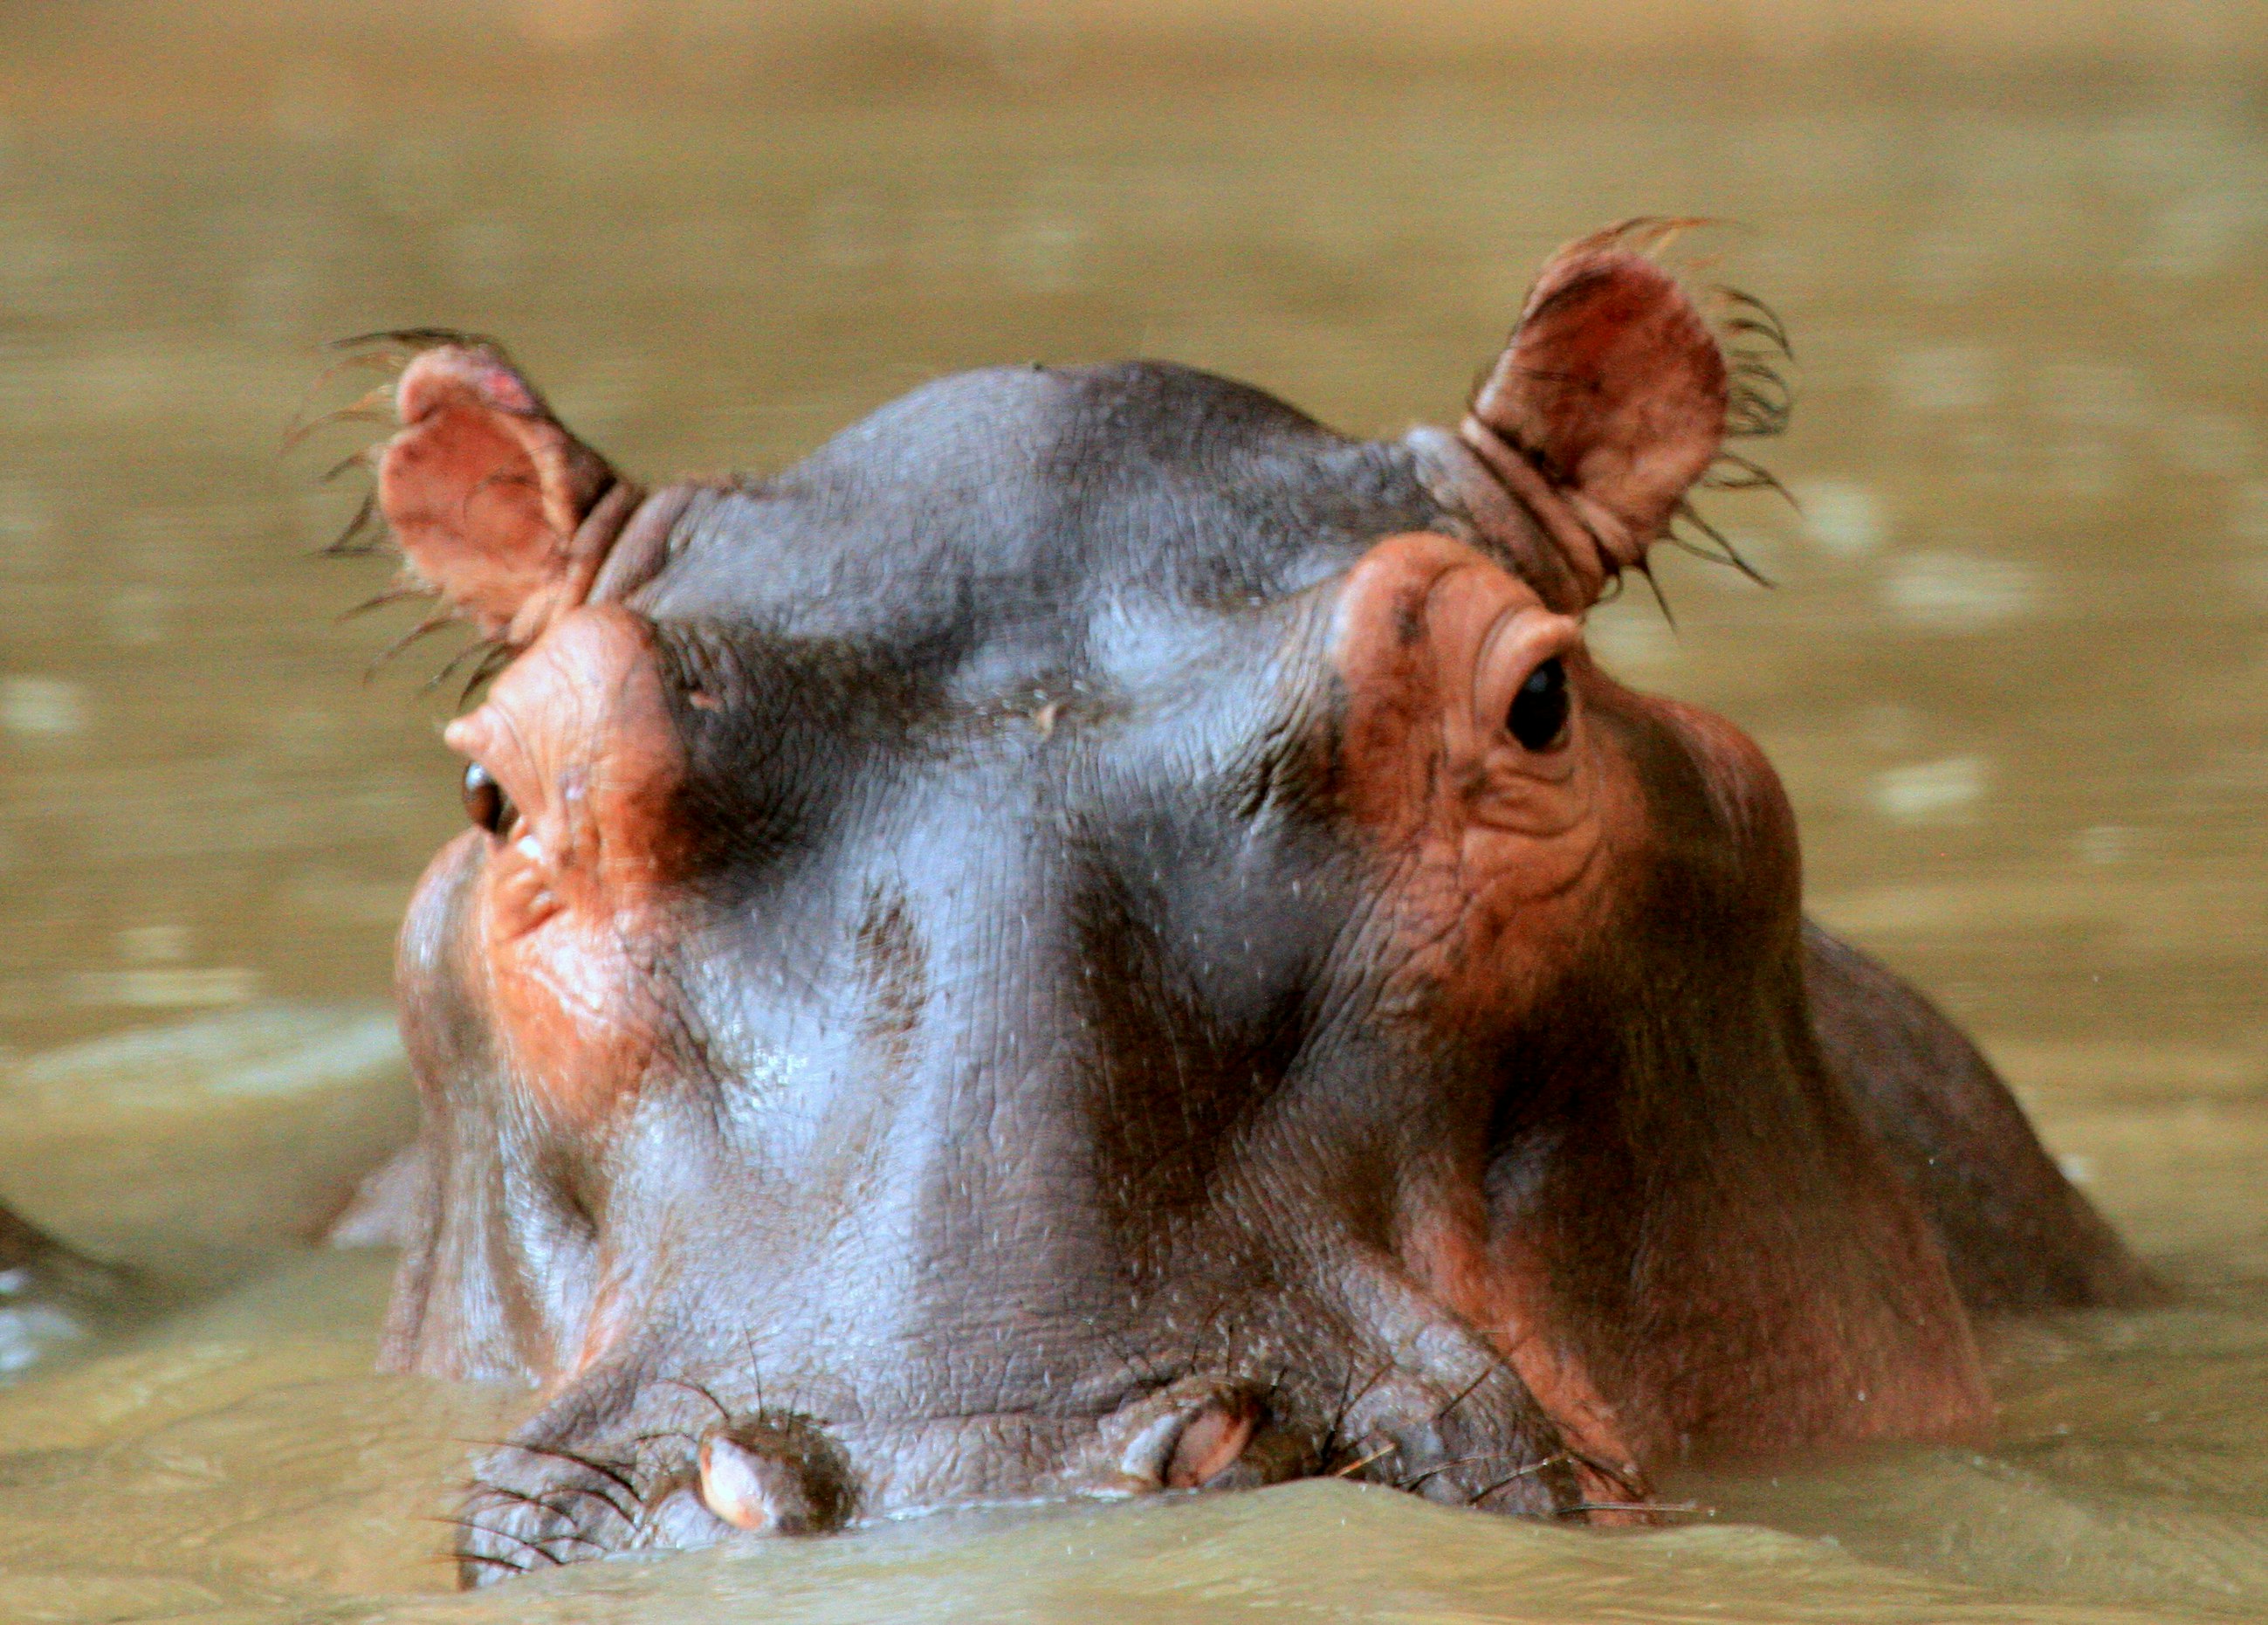 Could Pablo Escobar’s Escaped Hippos Help the Environment?